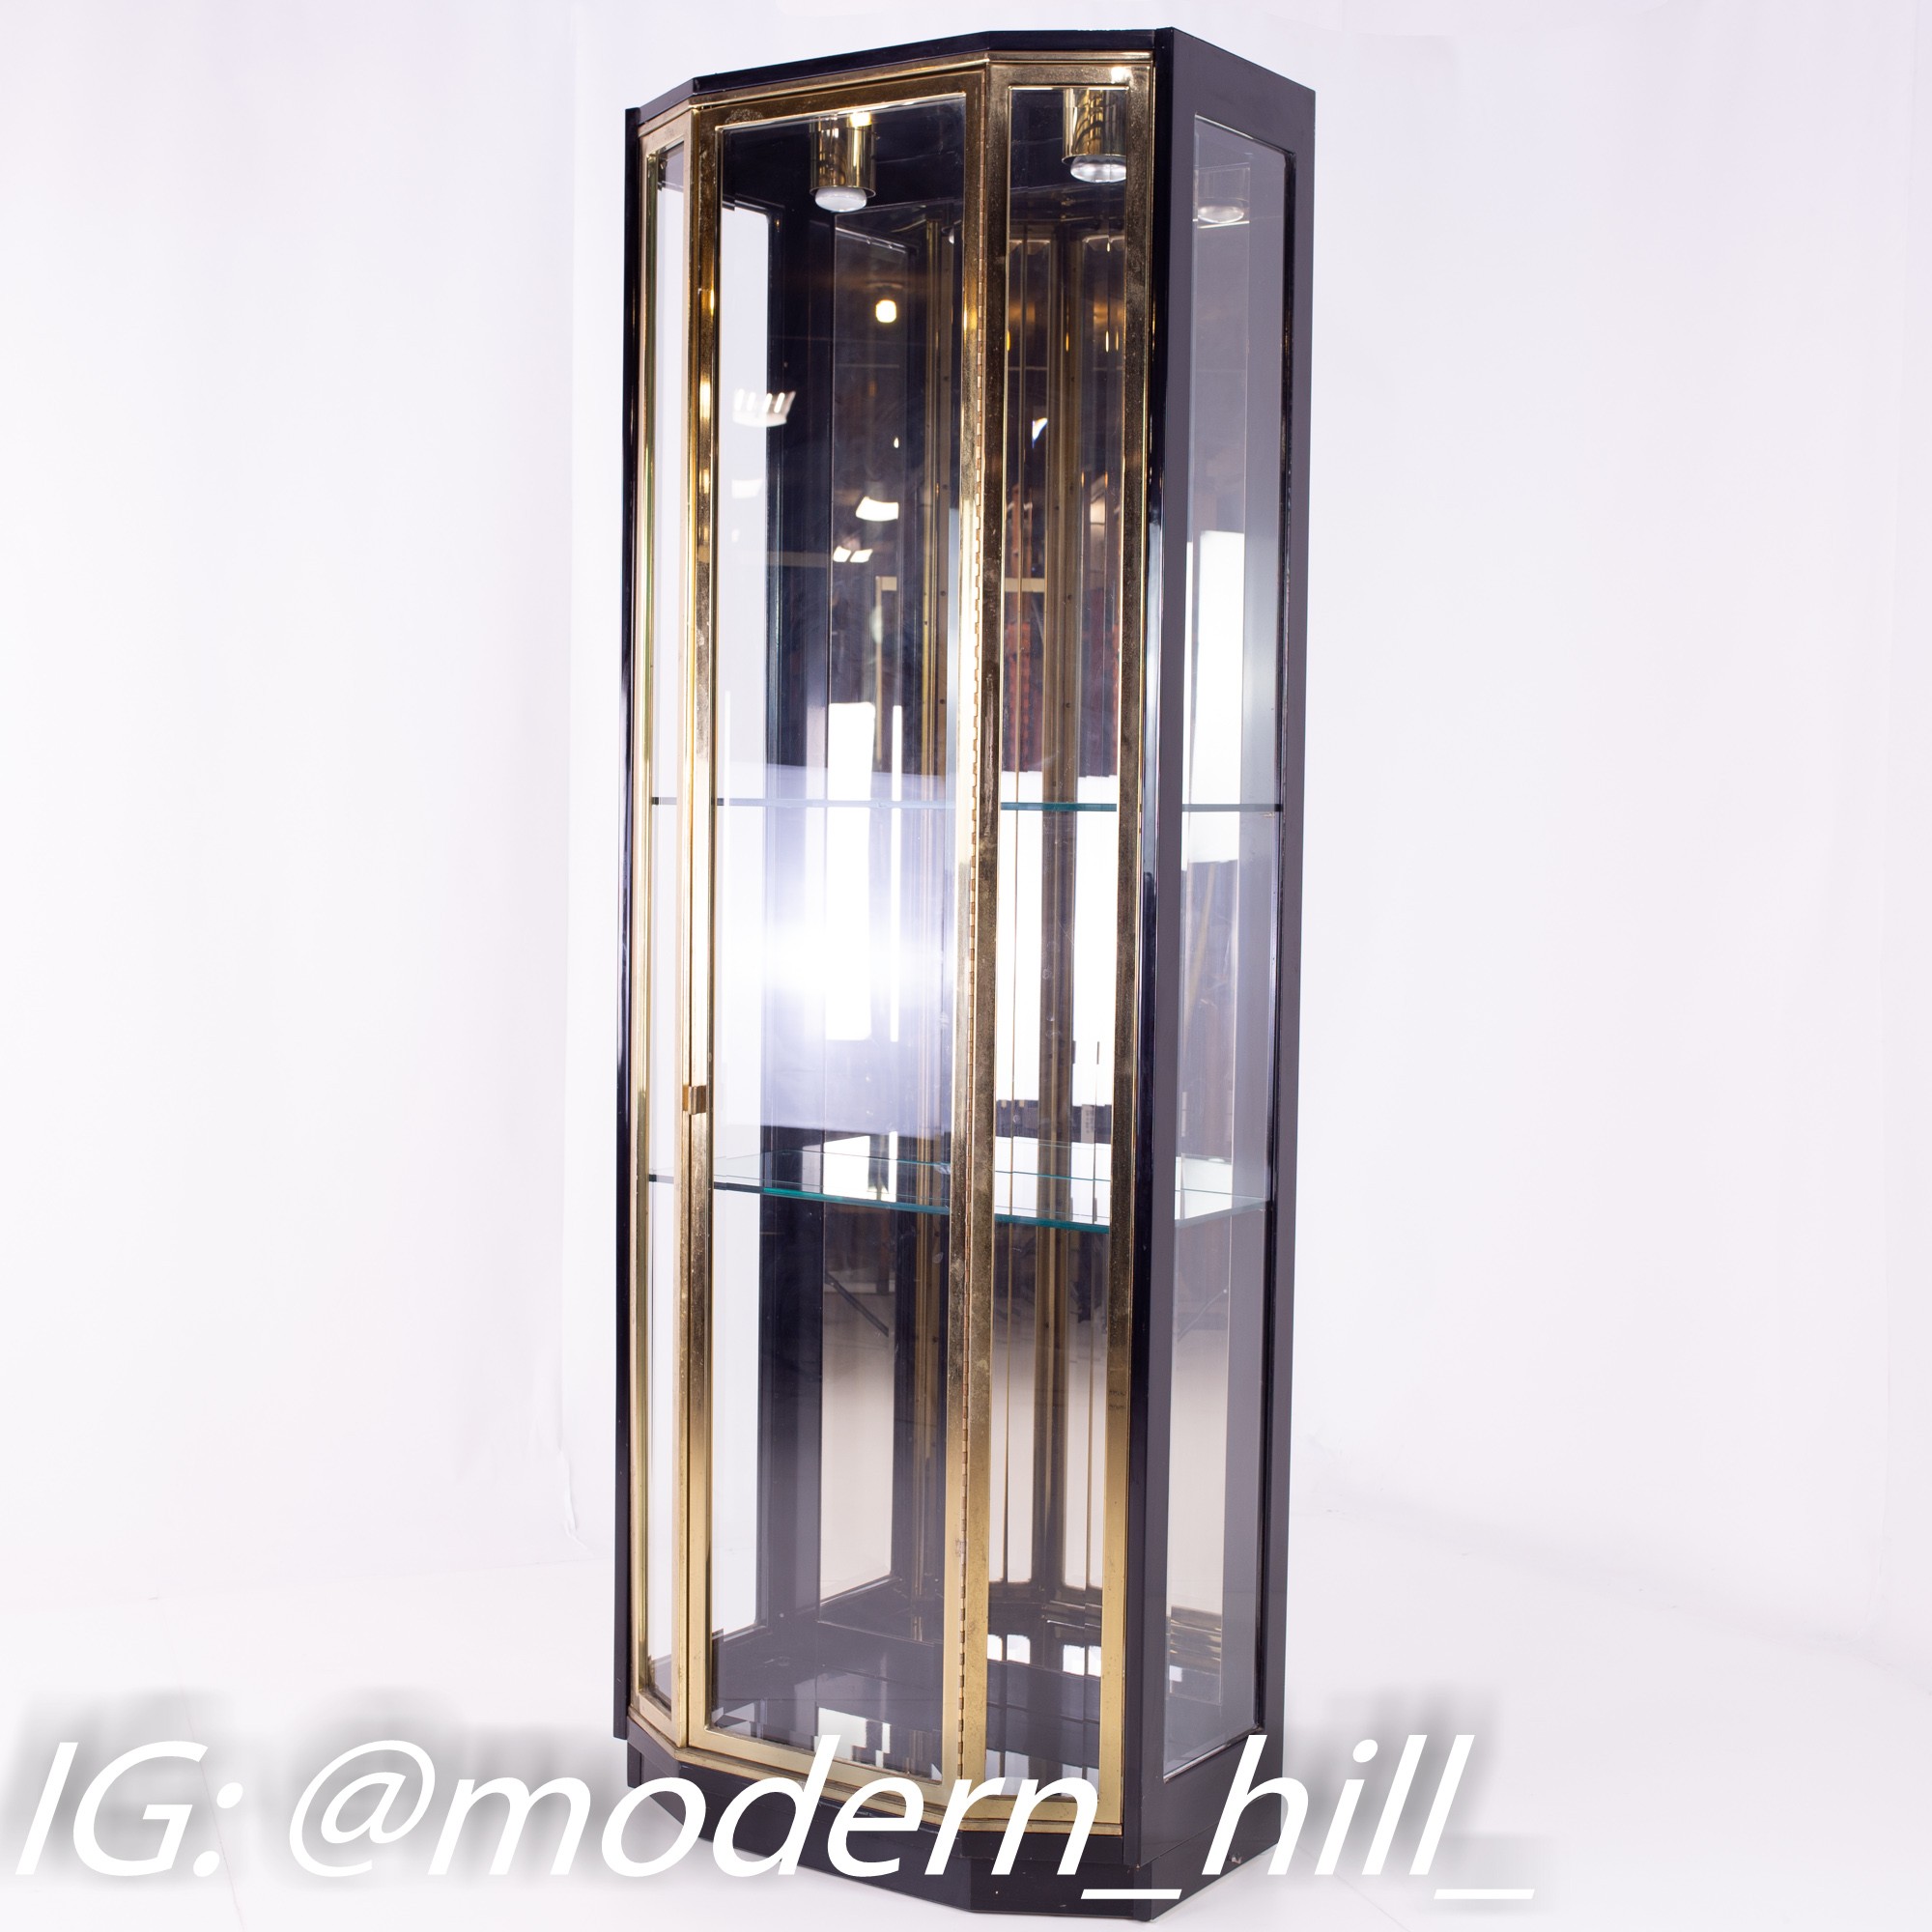 Copy of Henredon Black & Brass Mid Century Display Cabinets